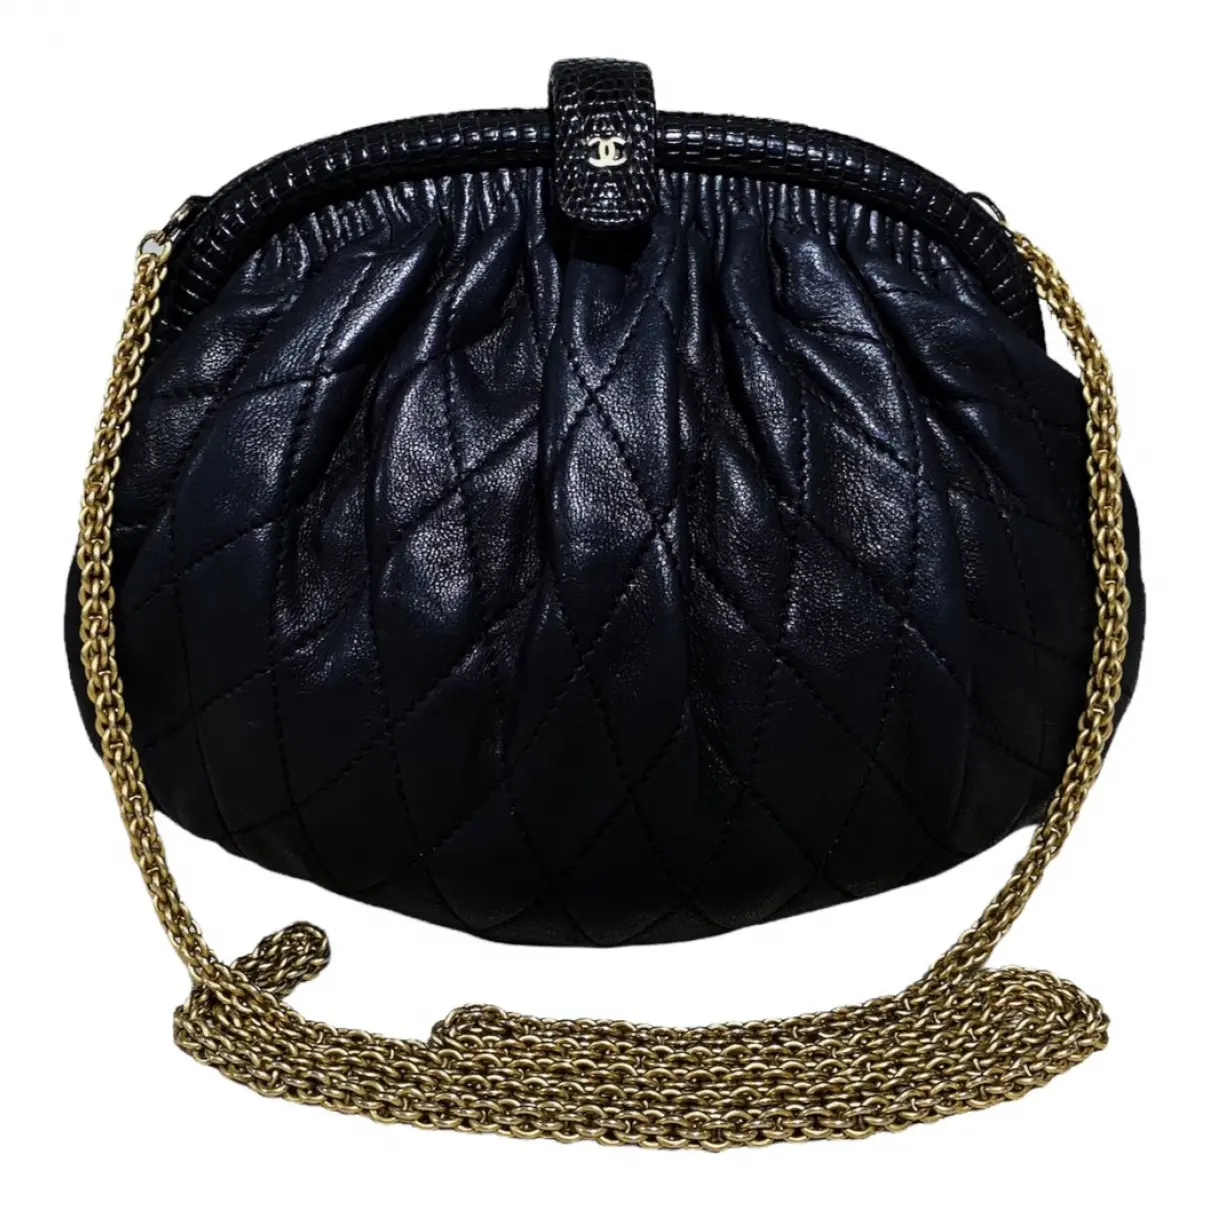 Lizard handbag Chanel - Vintage